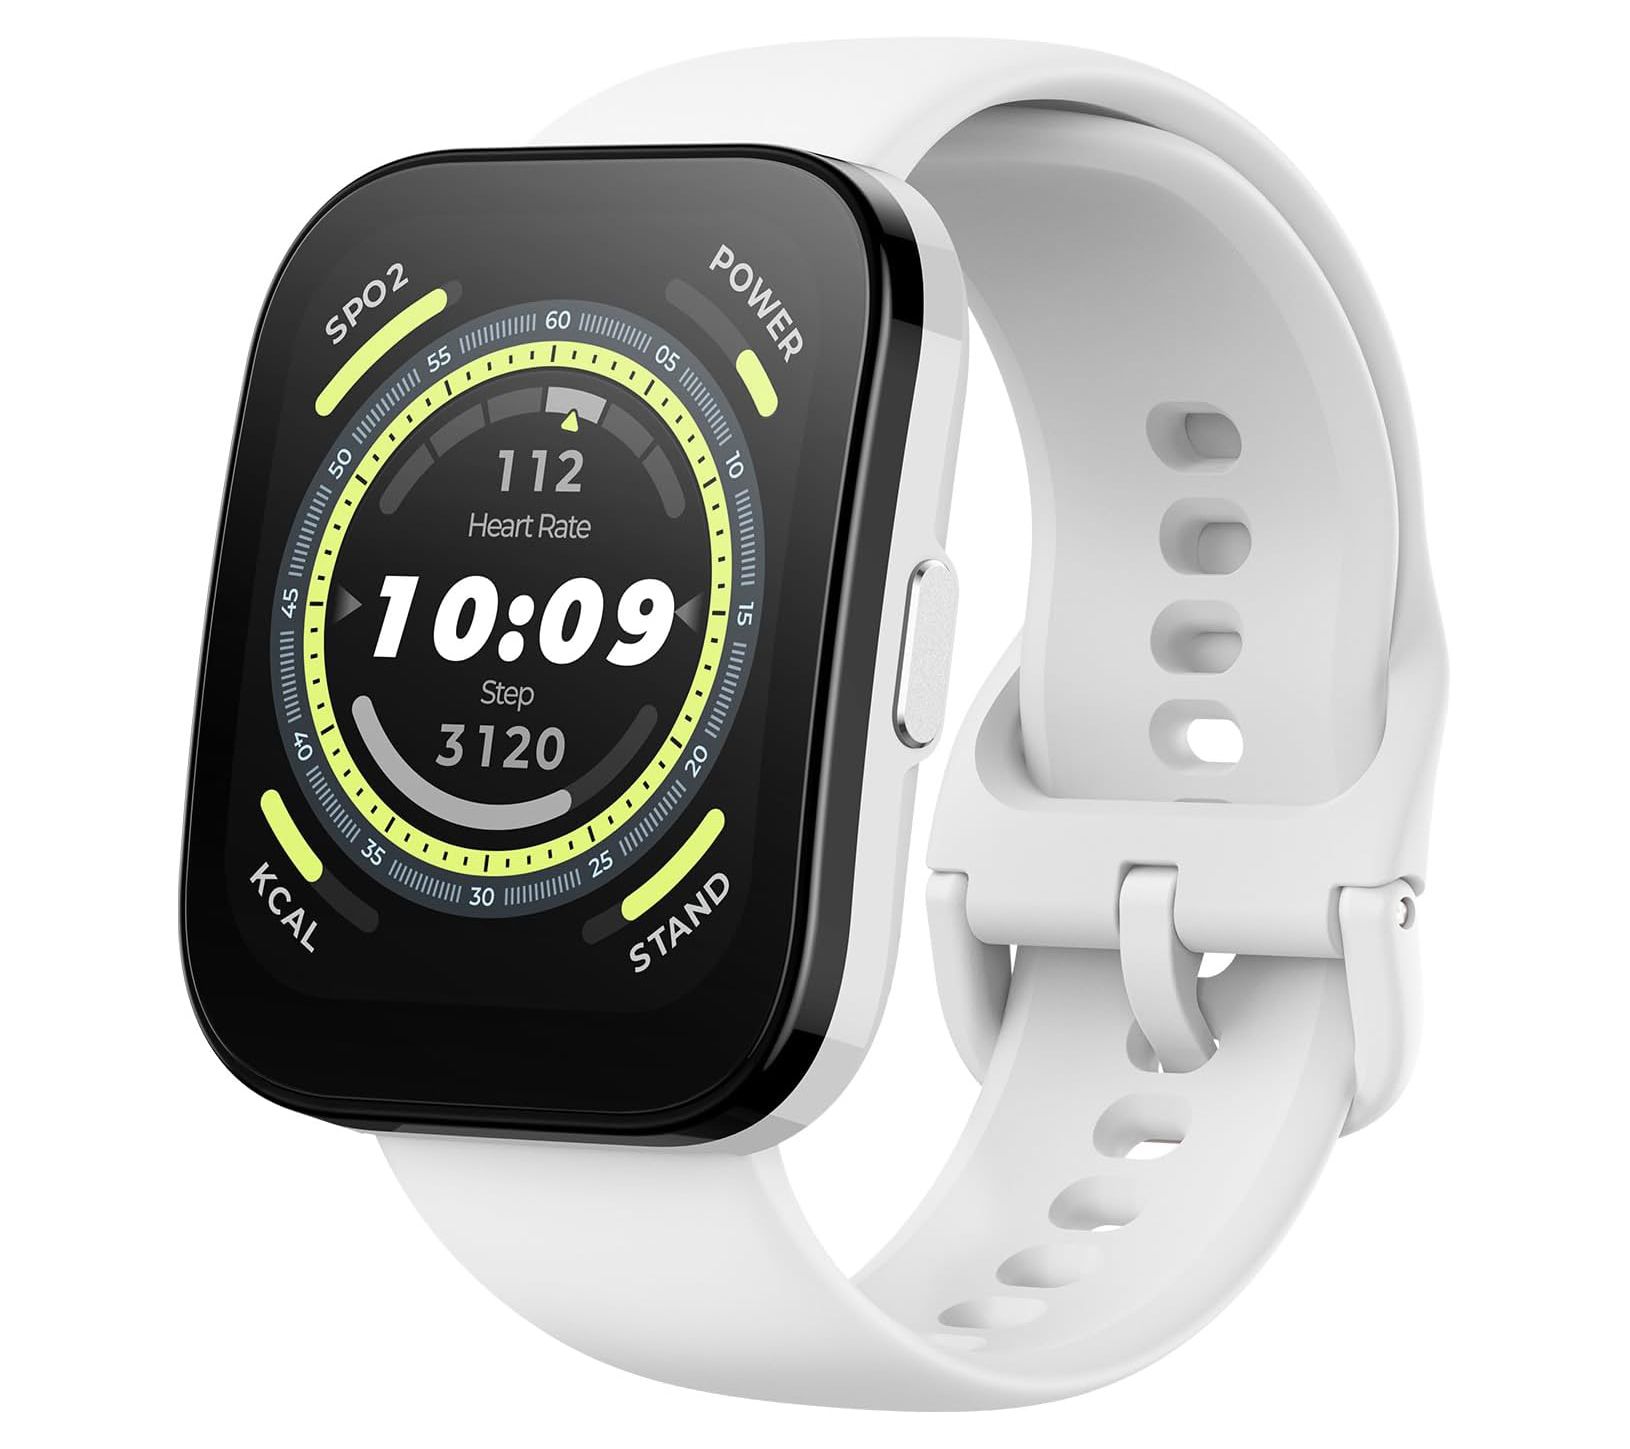 Amazfit Bip U Pro Review: Quite an Interesting Smartwatch